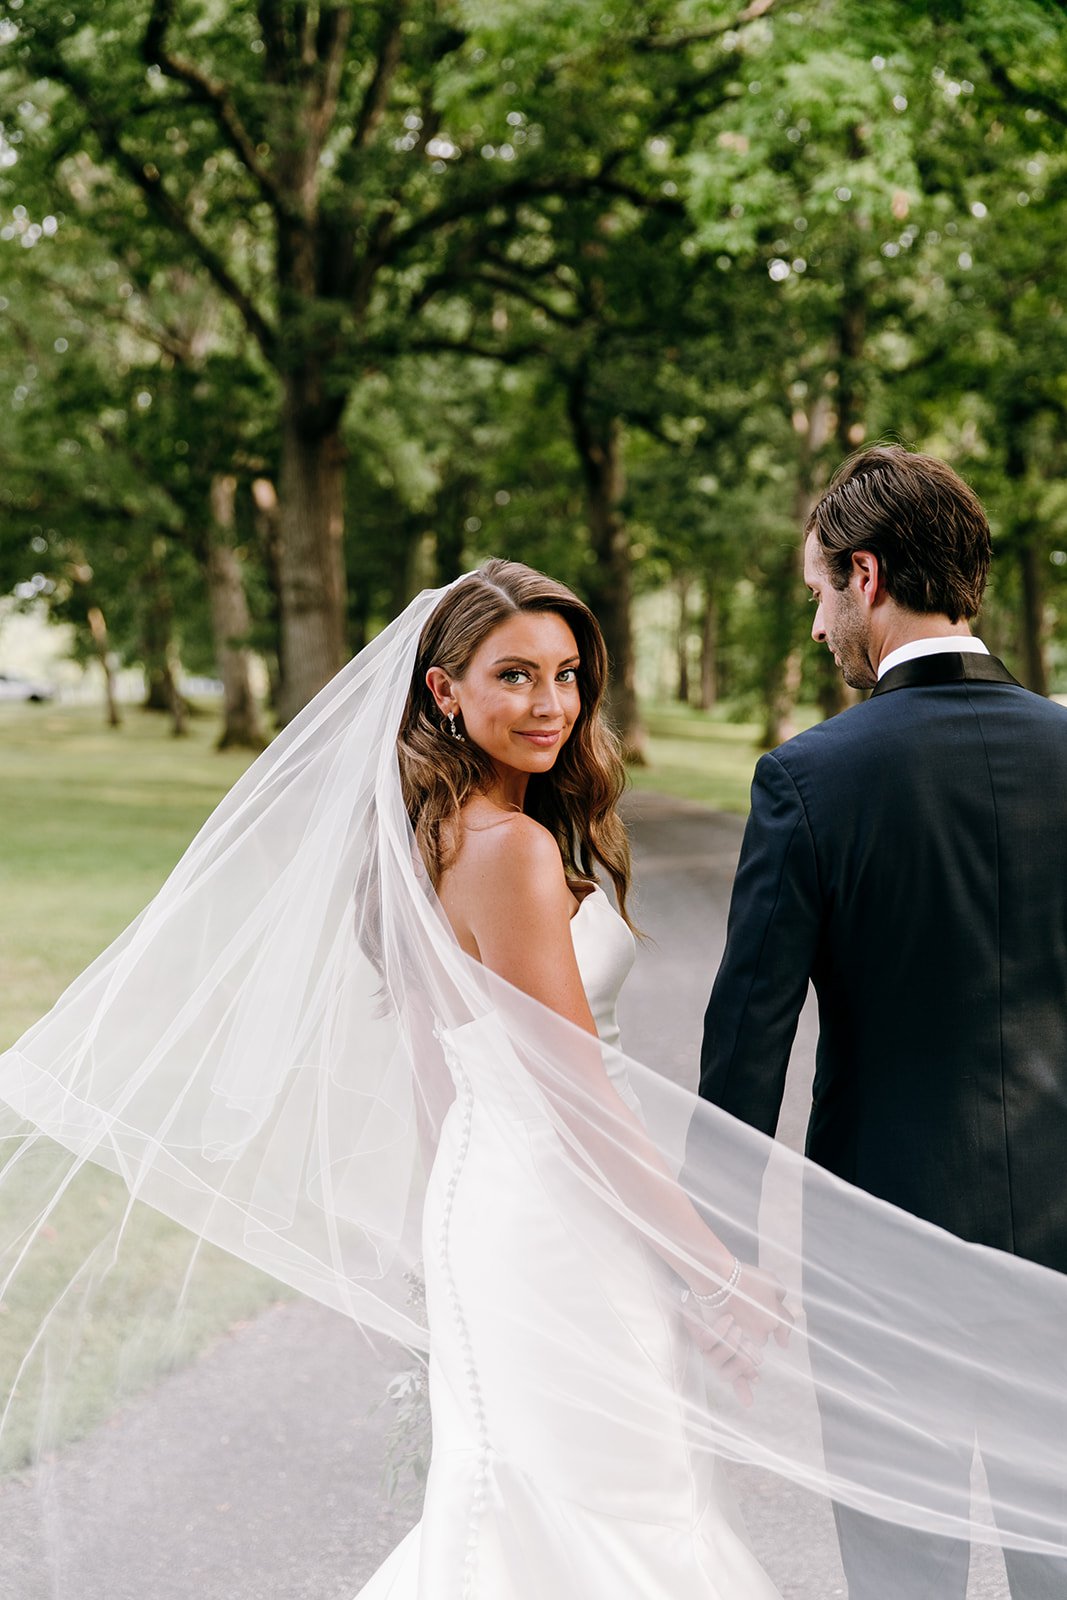 bride and groom walking with veil flowing behind them